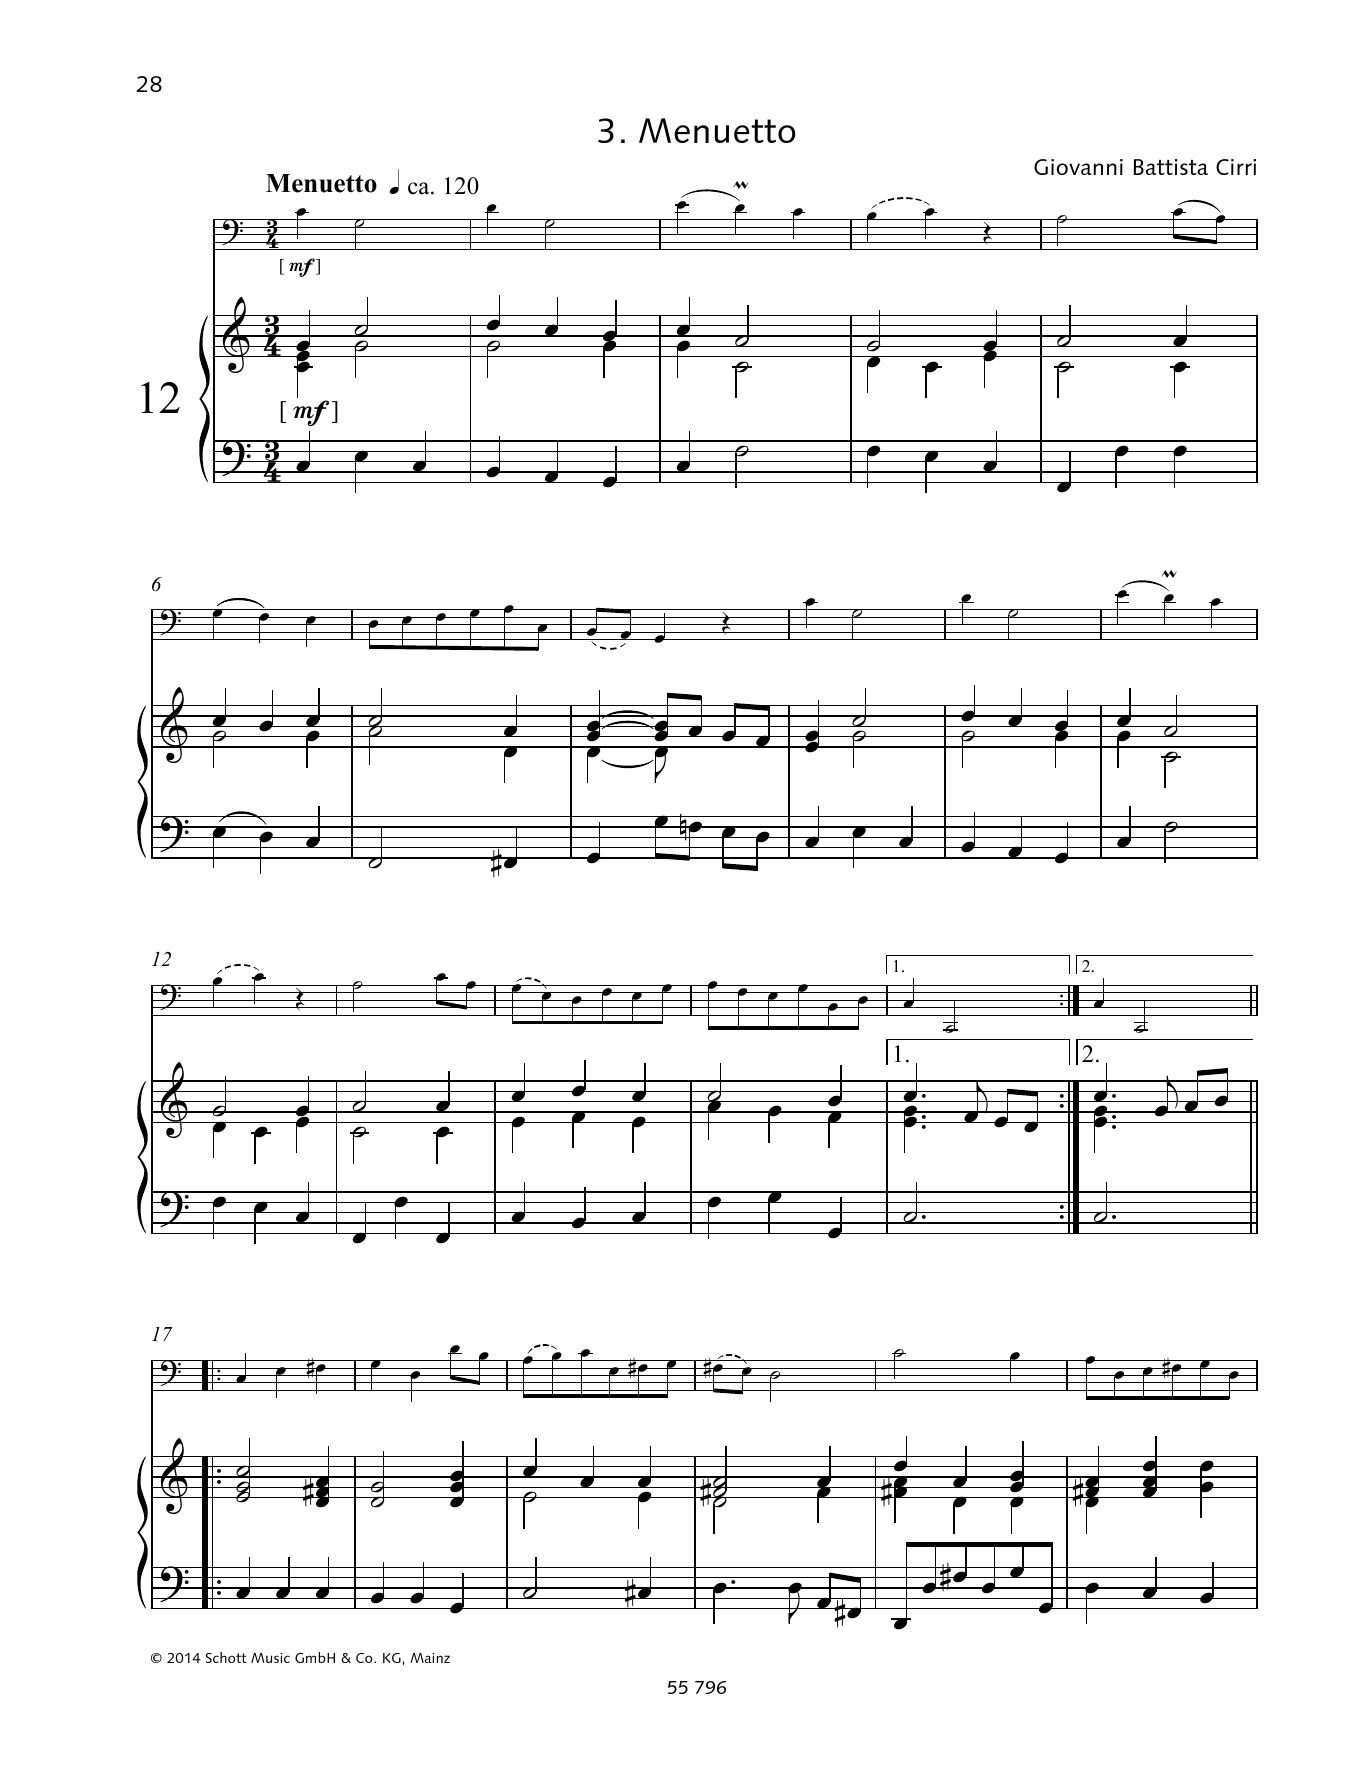 Download Giovanni Battista Cirri Menuetto Sheet Music and learn how to play String Solo PDF digital score in minutes